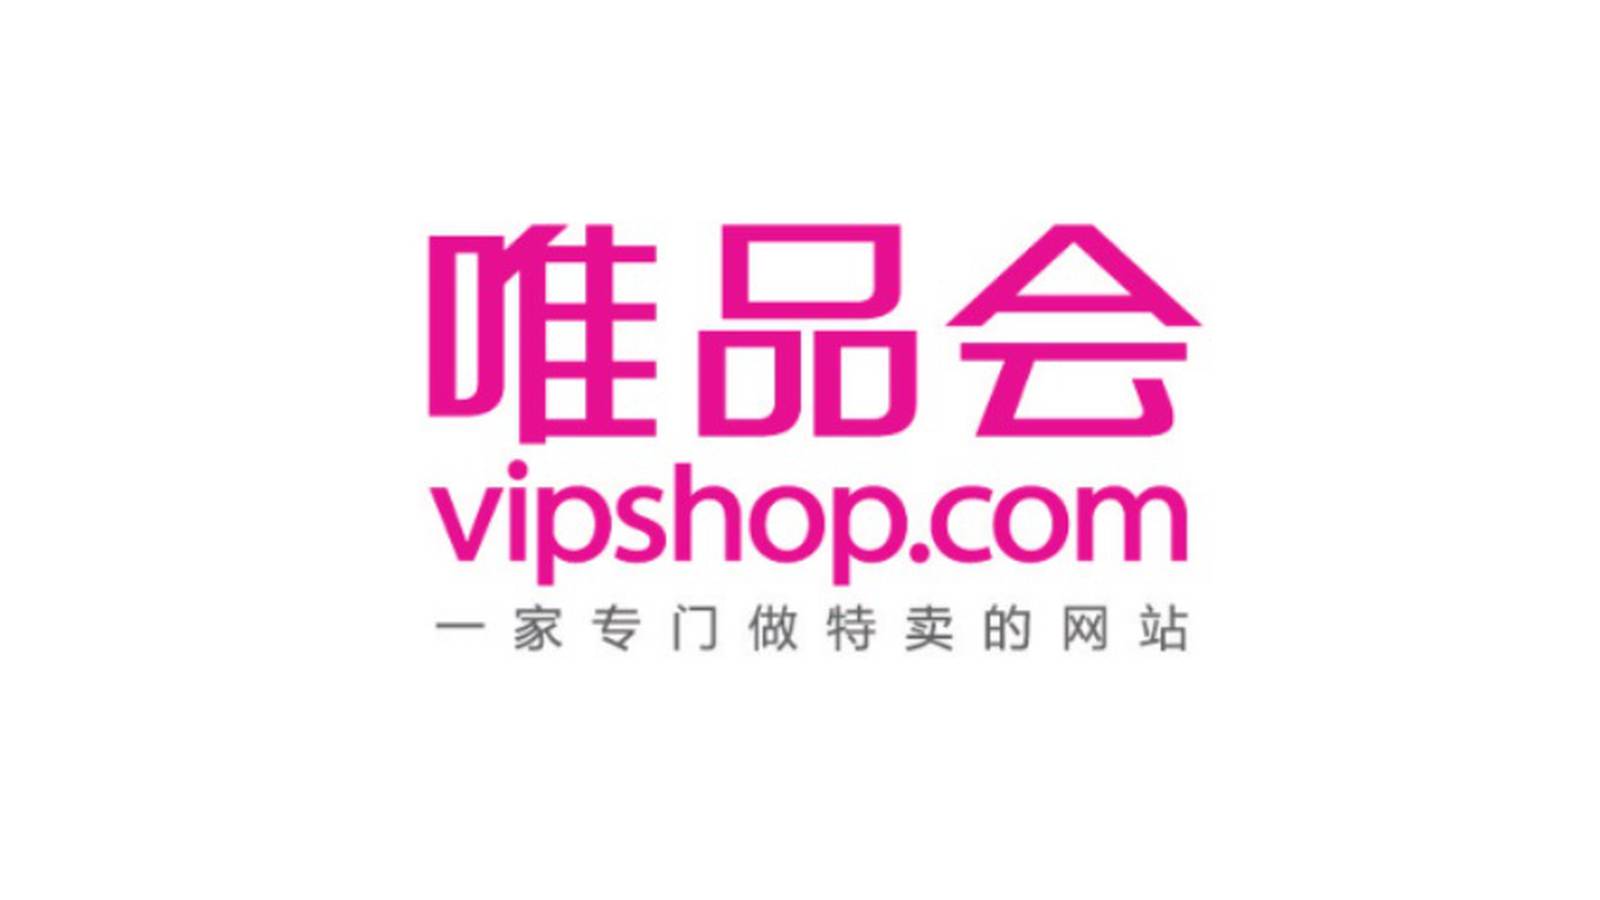 Chinese Flash Sales Platform Vipshop Sees Q2 Net Profit Up 11.3% | BoF